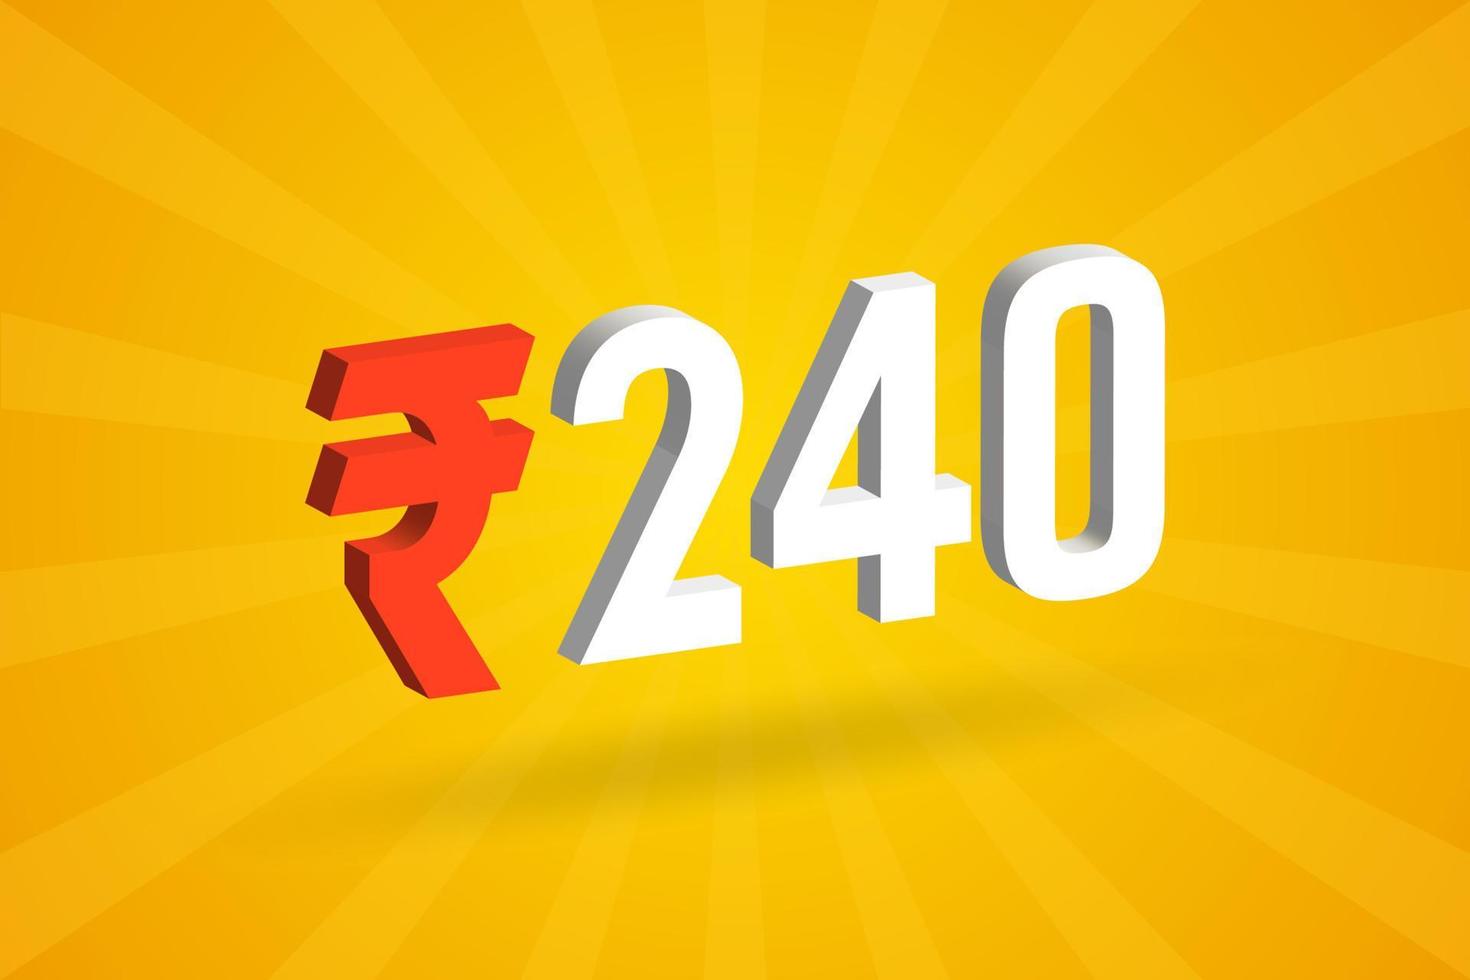 240 rupias símbolo 3d imagen vectorial de texto en negrita. 3d 240 rupia india signo de moneda ilustración vectorial vector